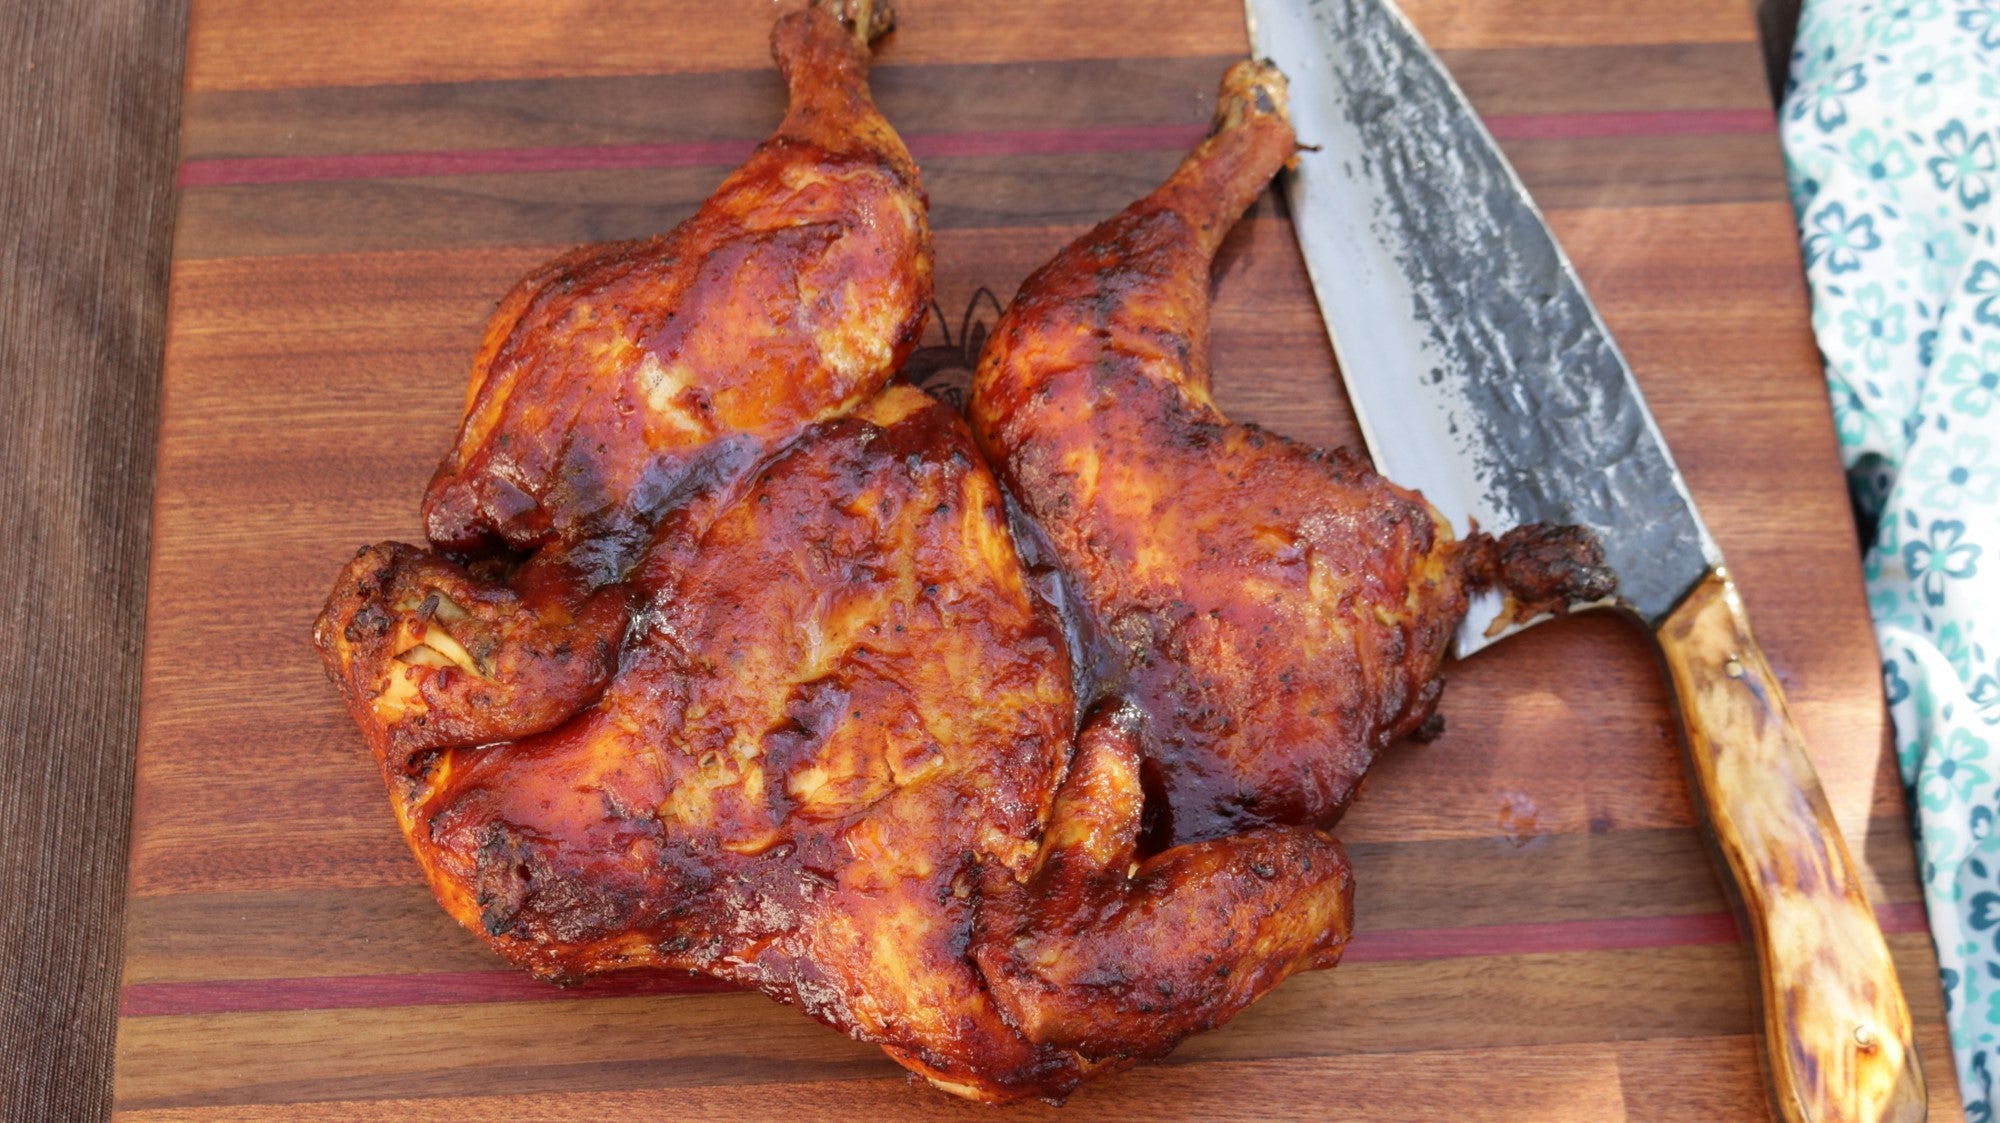 Spatchcock Chicken Recipe